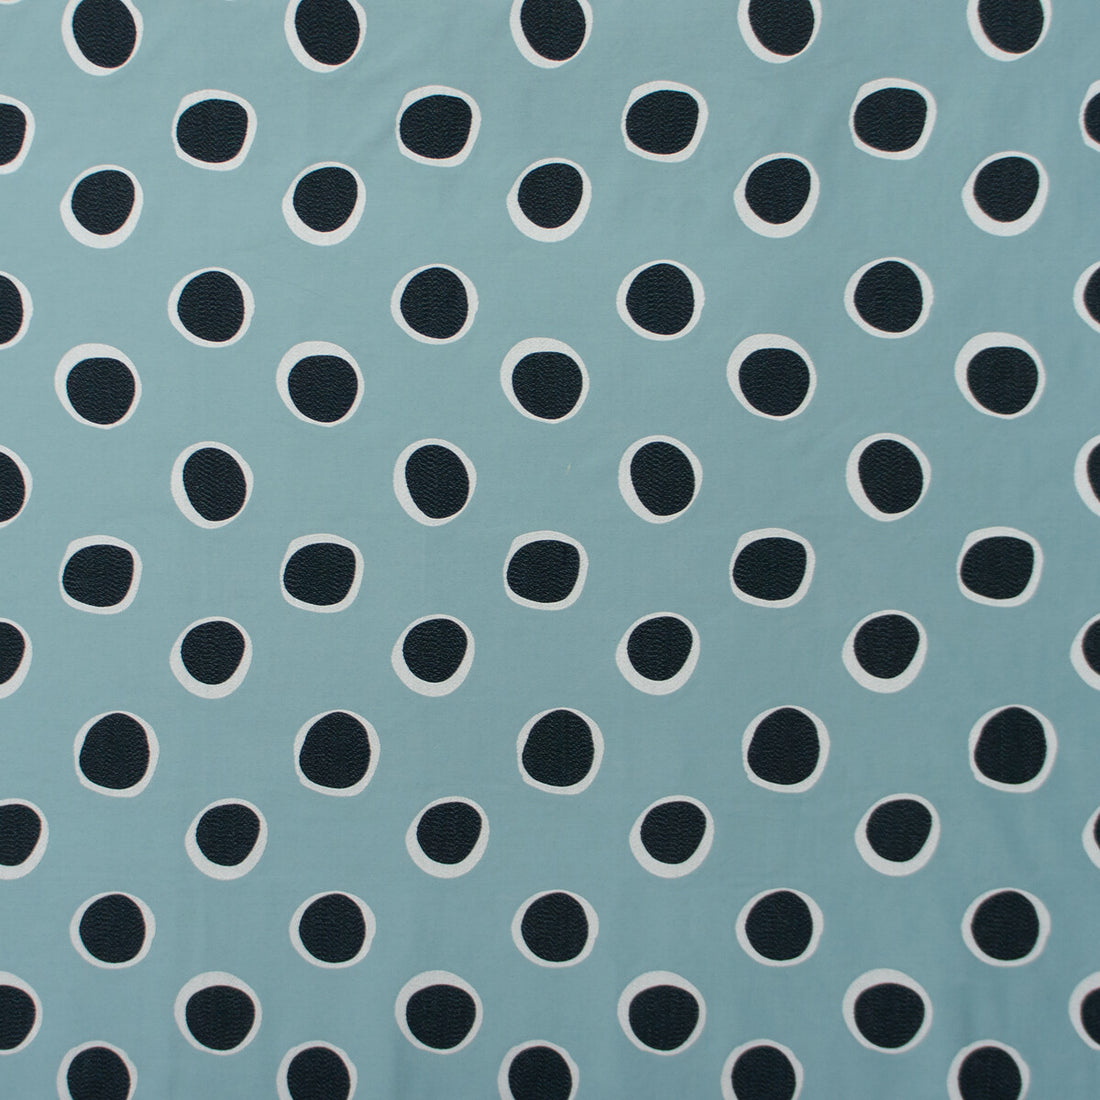 Solis fabric in fondo agua color - pattern GDT5587.006.0 - by Gaston y Daniela in the Gaston Nuevo Mundo collection